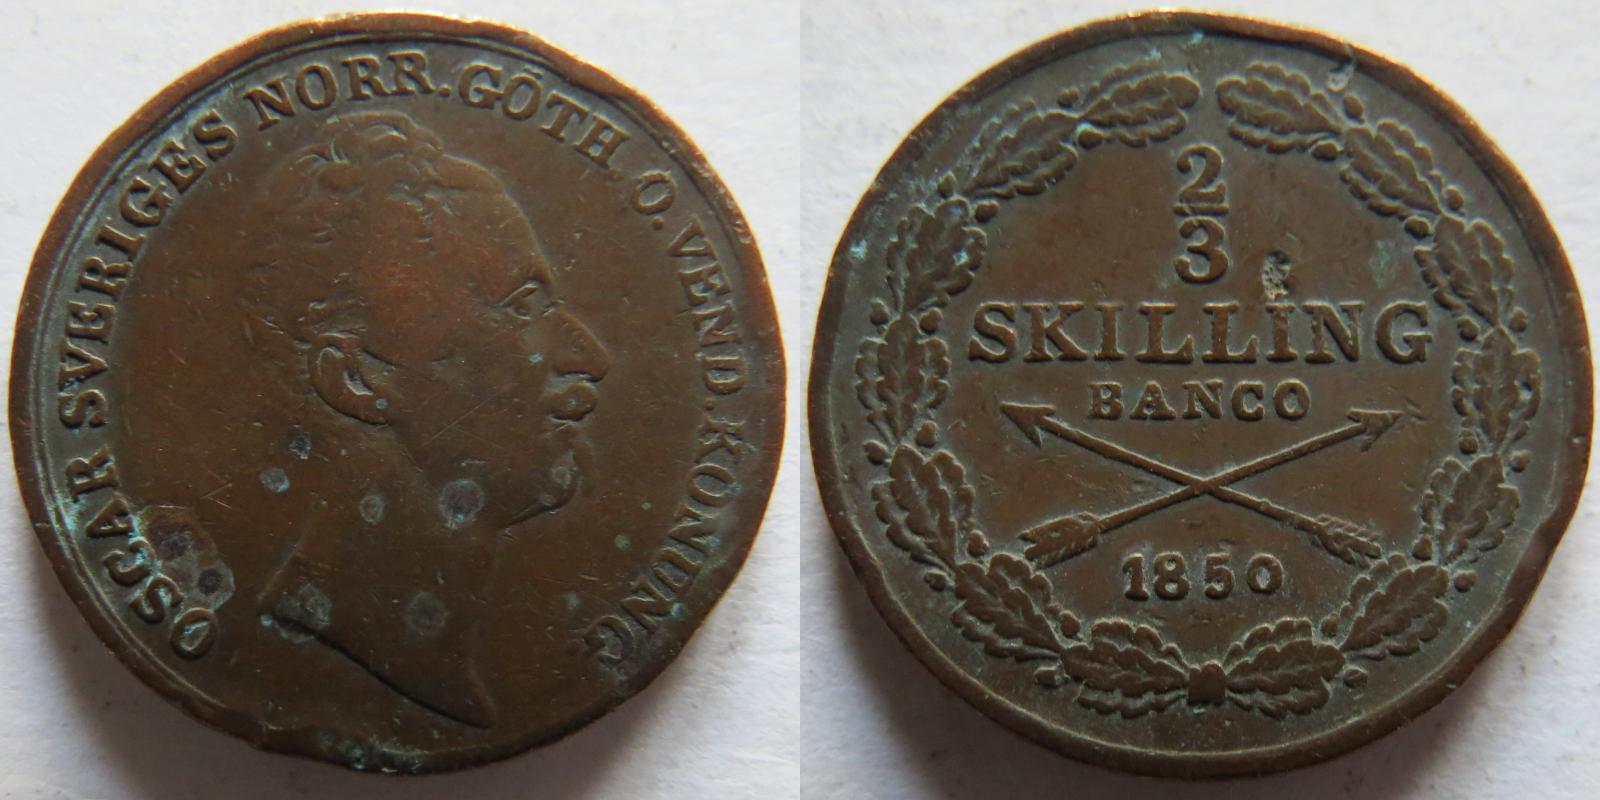 Sweden 2:3 Skilling Banco 1850 copy.jpg